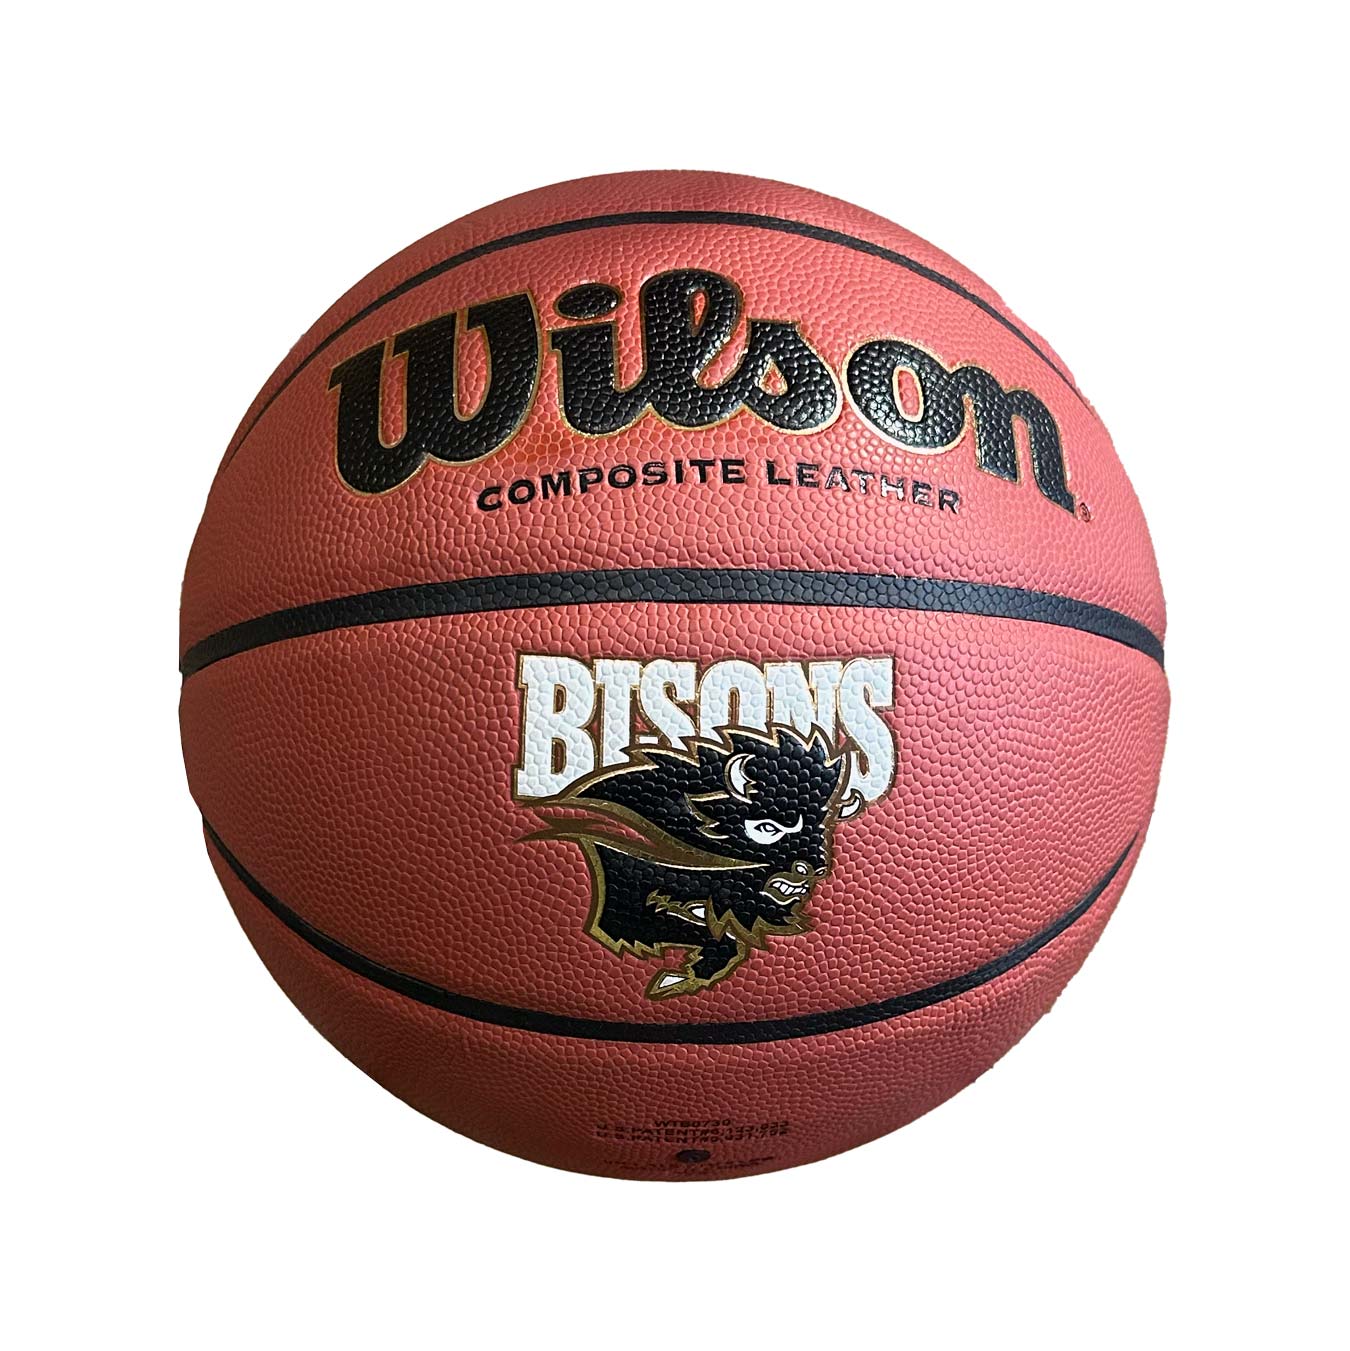 Wilson NCAA Replica Composite Leather Basketball - Size 7 Bison logo